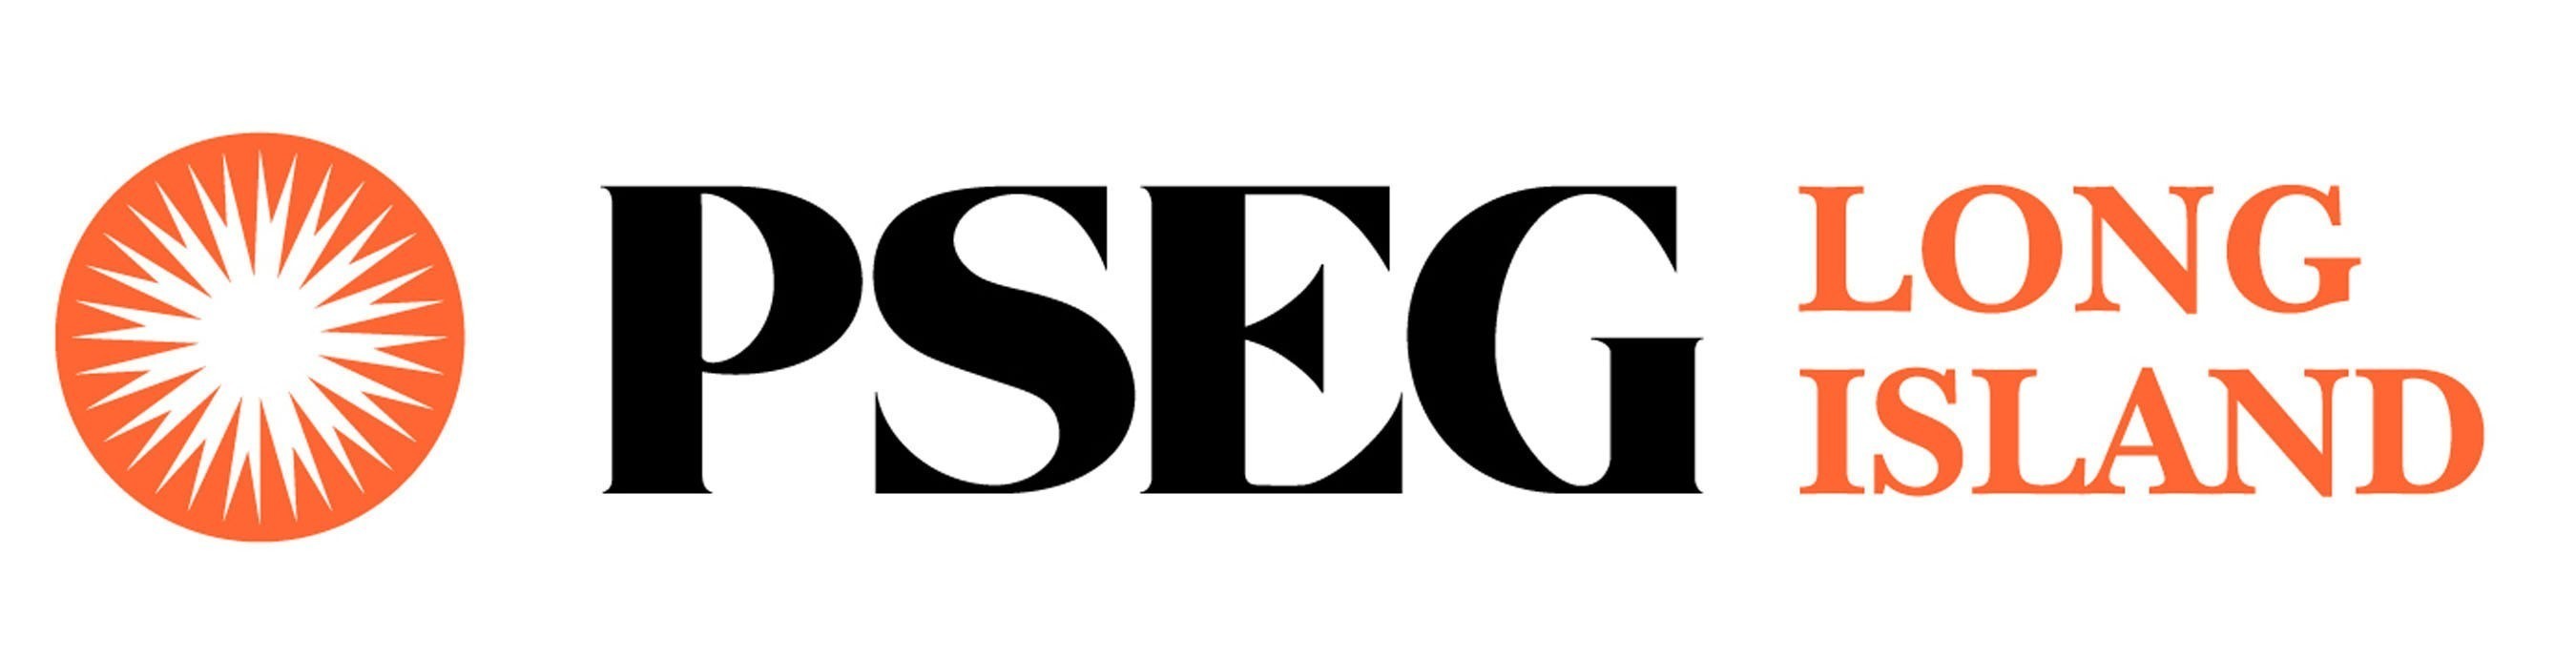 PSEG Long Island logo (PRNewsFoto/PSEG Long Island)